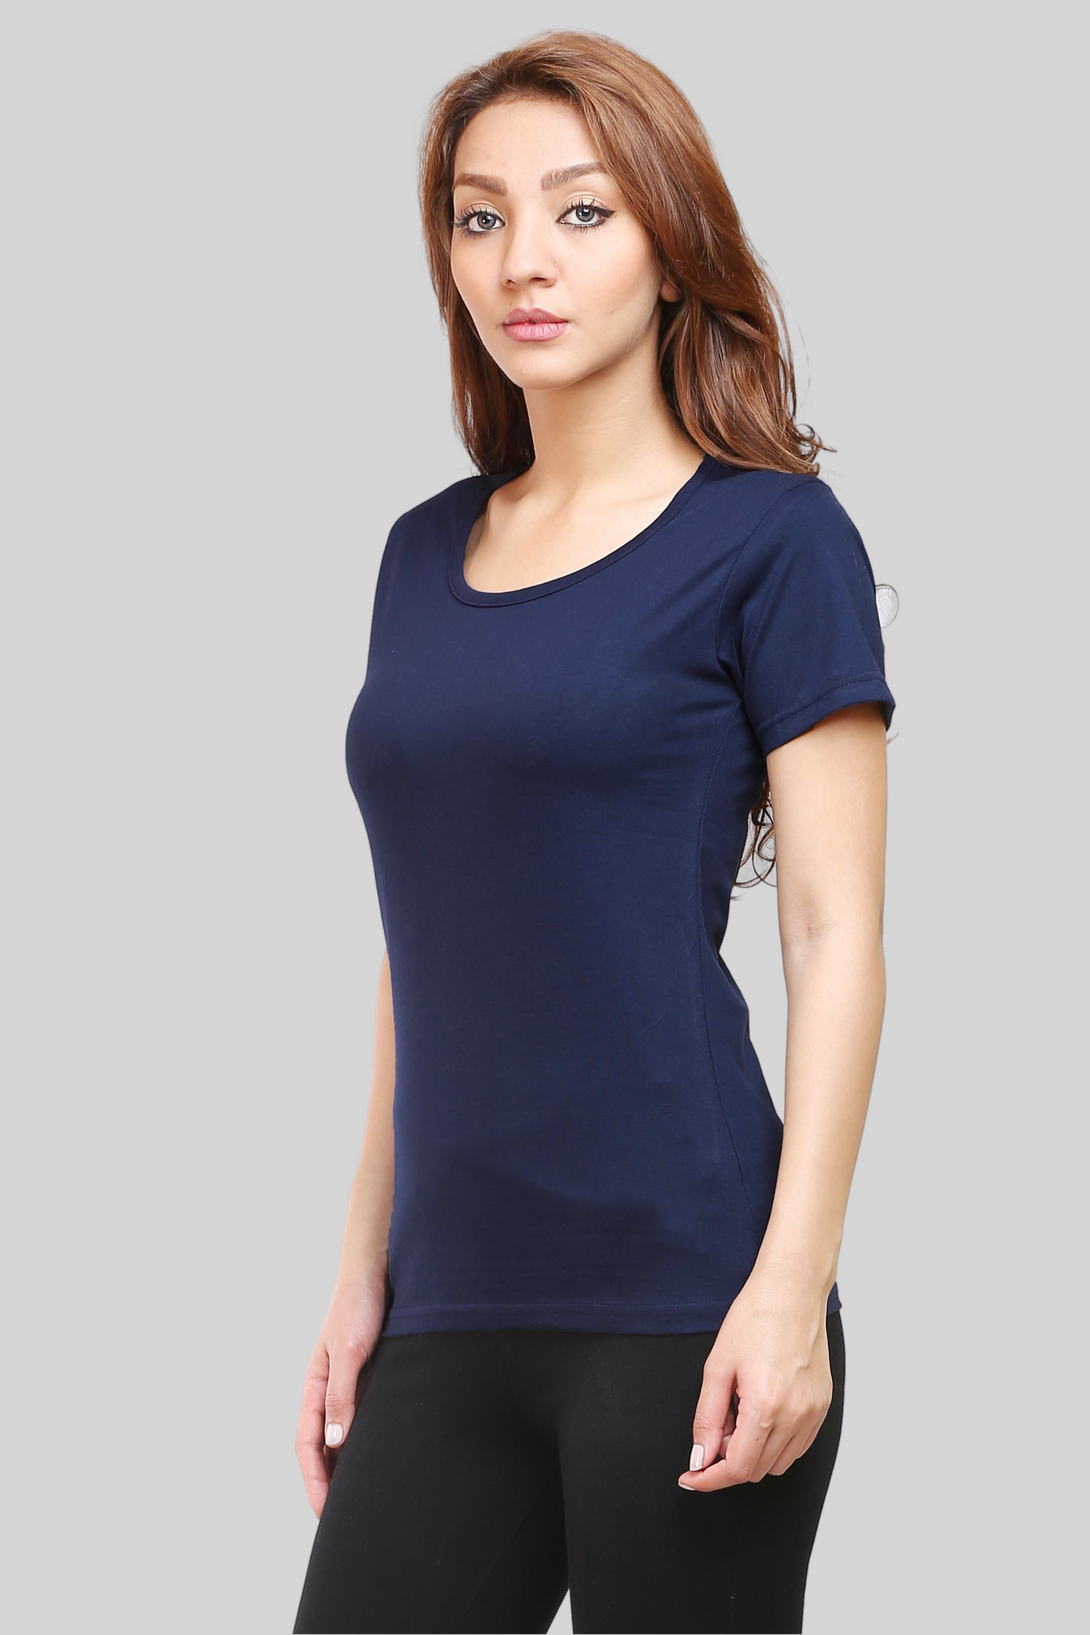 Navy Blue Scoop Neck T-Shirt For Women - WowWaves